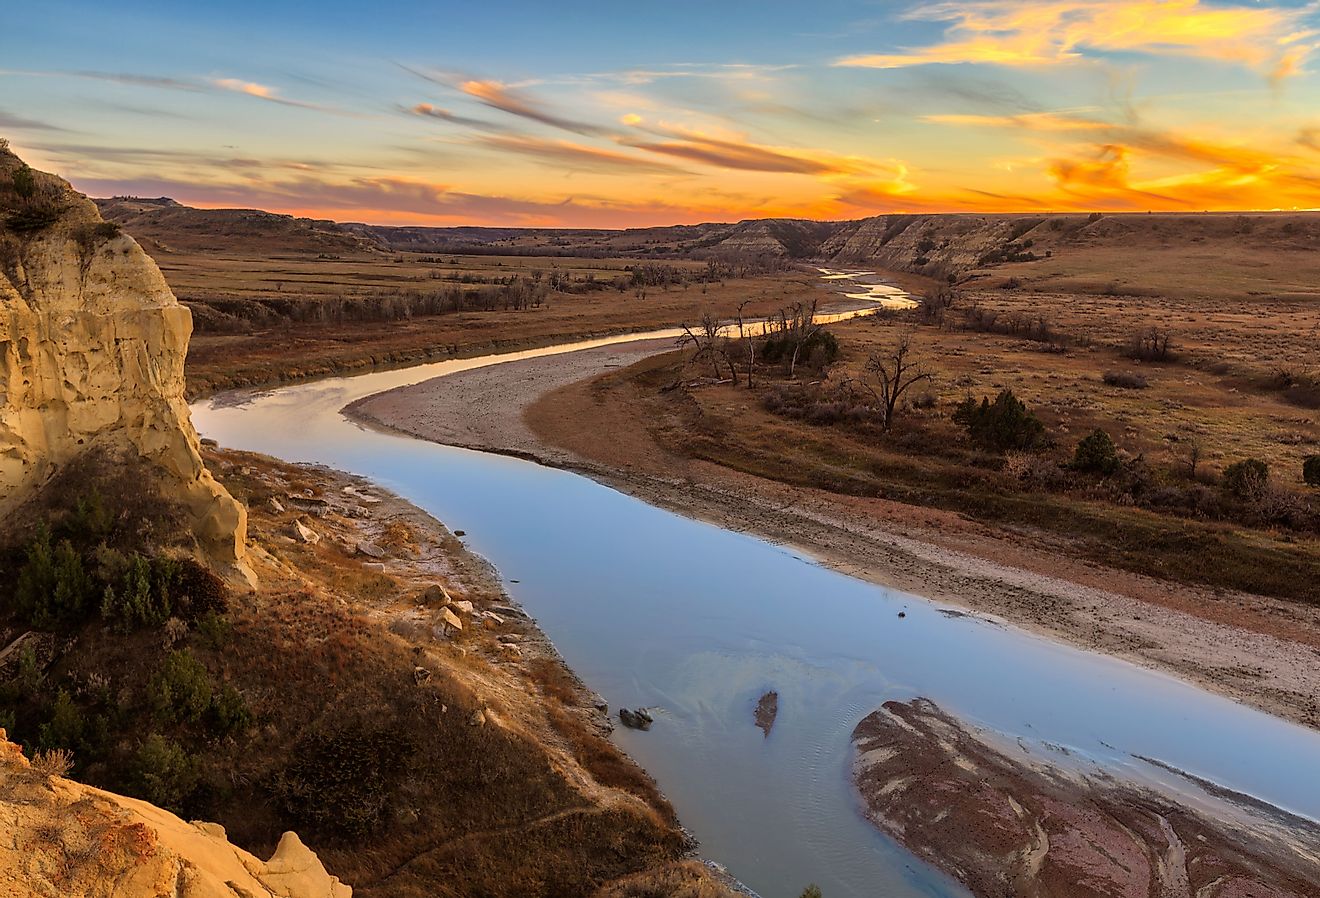 The Little Missouri River cuts through Theodore Roosevelt National Park, North Dakota. Image credit ZakZeinert via Shutterstock.